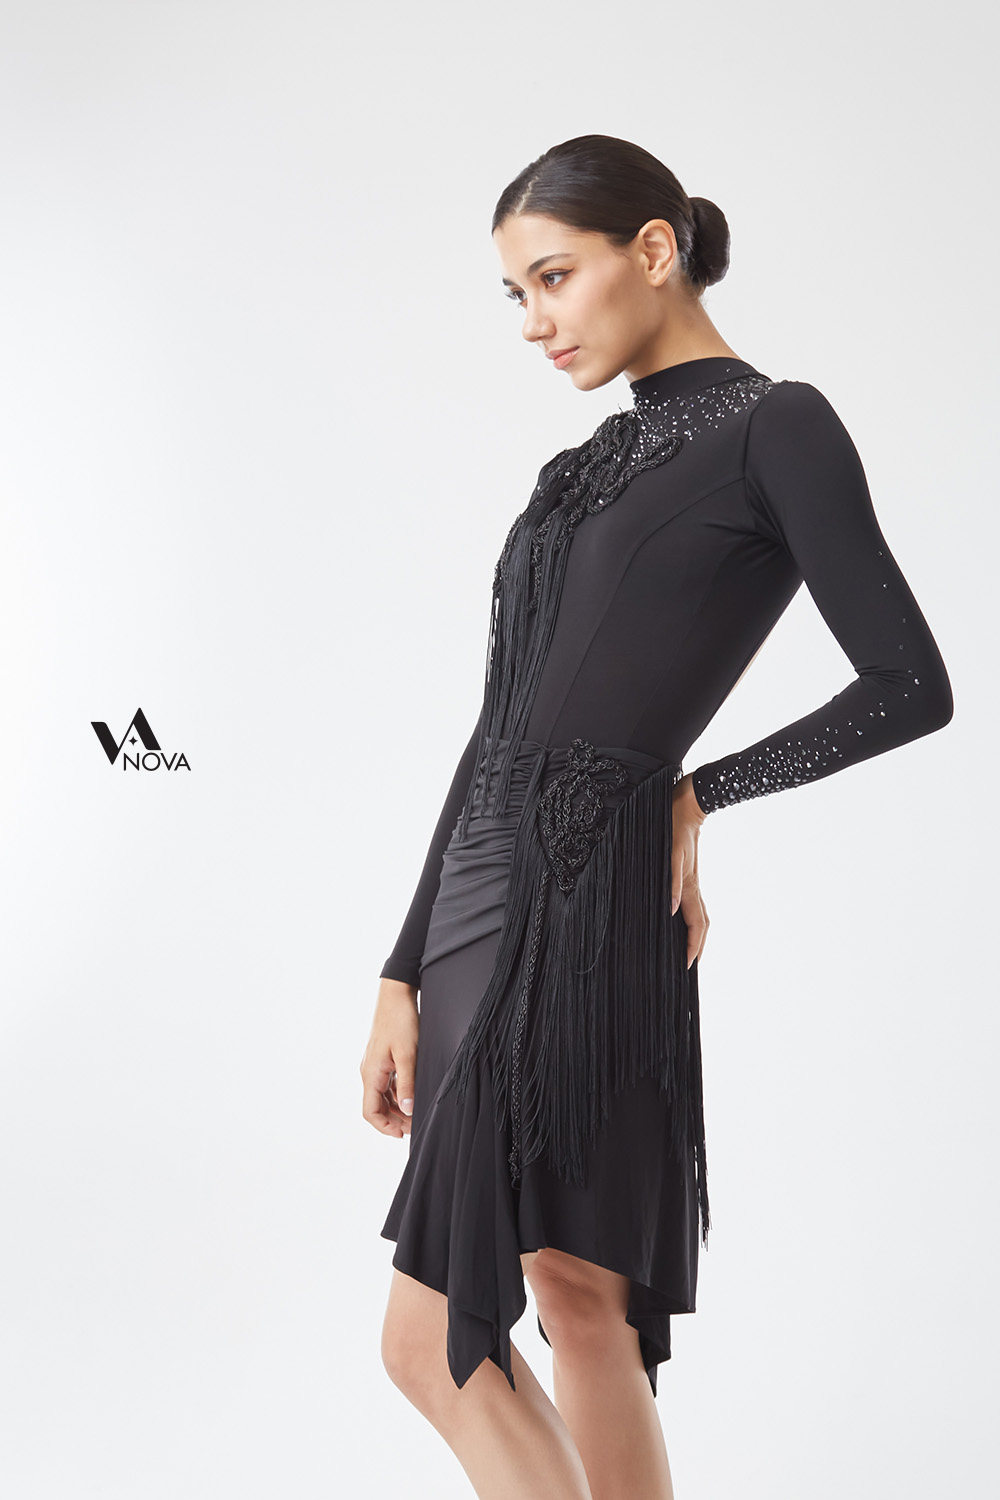 Backless Black Mid-length Dress